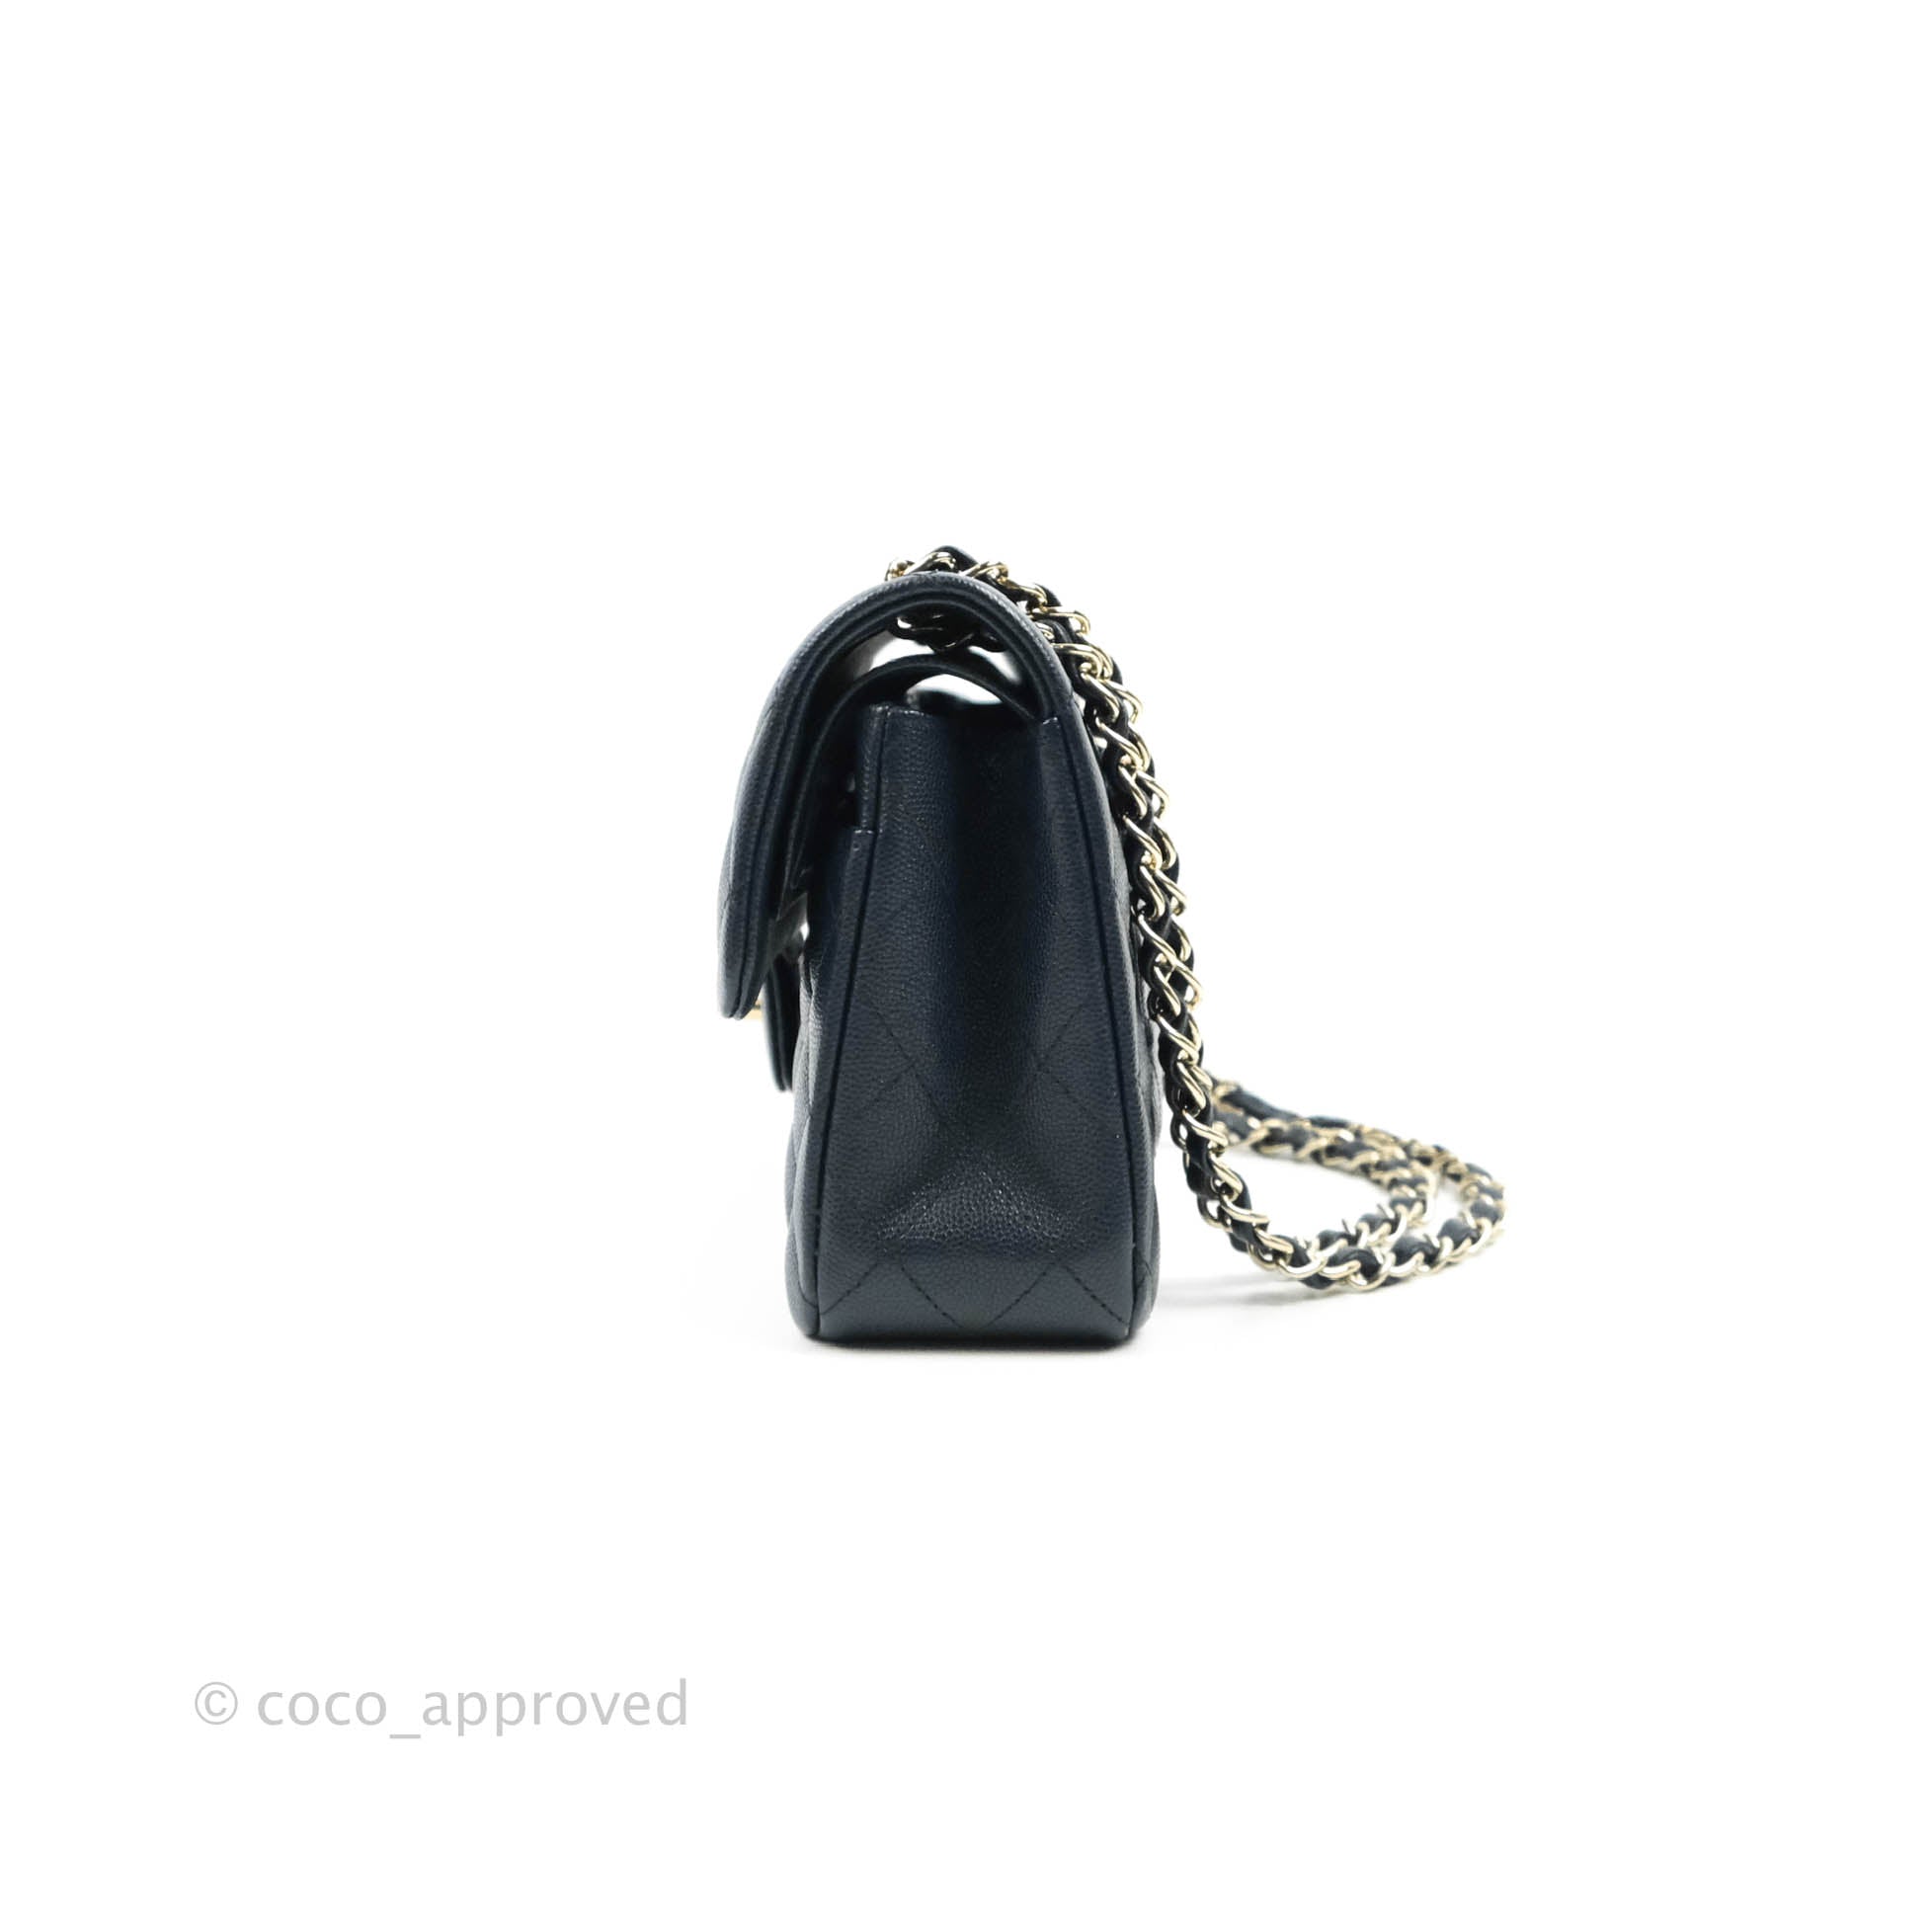 Keira Knightley By Purse Blog Chanel Mini Classic Flap Crossbody Bag Fall  Street Style Inspo  Chanel street style Fashion inspo Street style bags